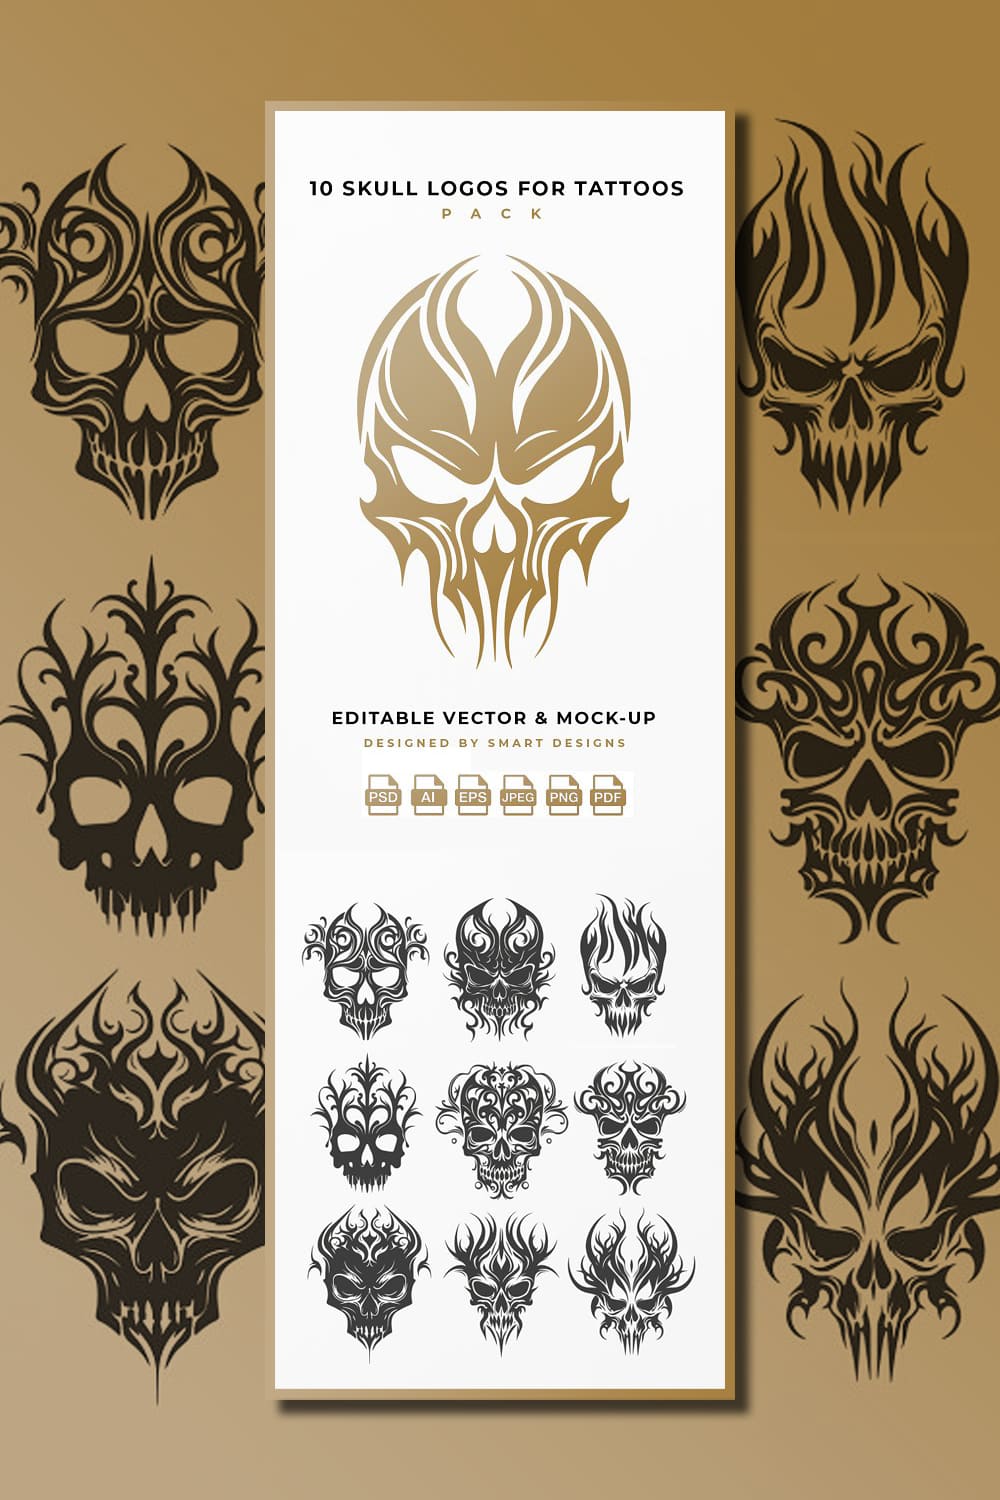 Skull Logos for Tattoos Pack x10 pinterest image preview.